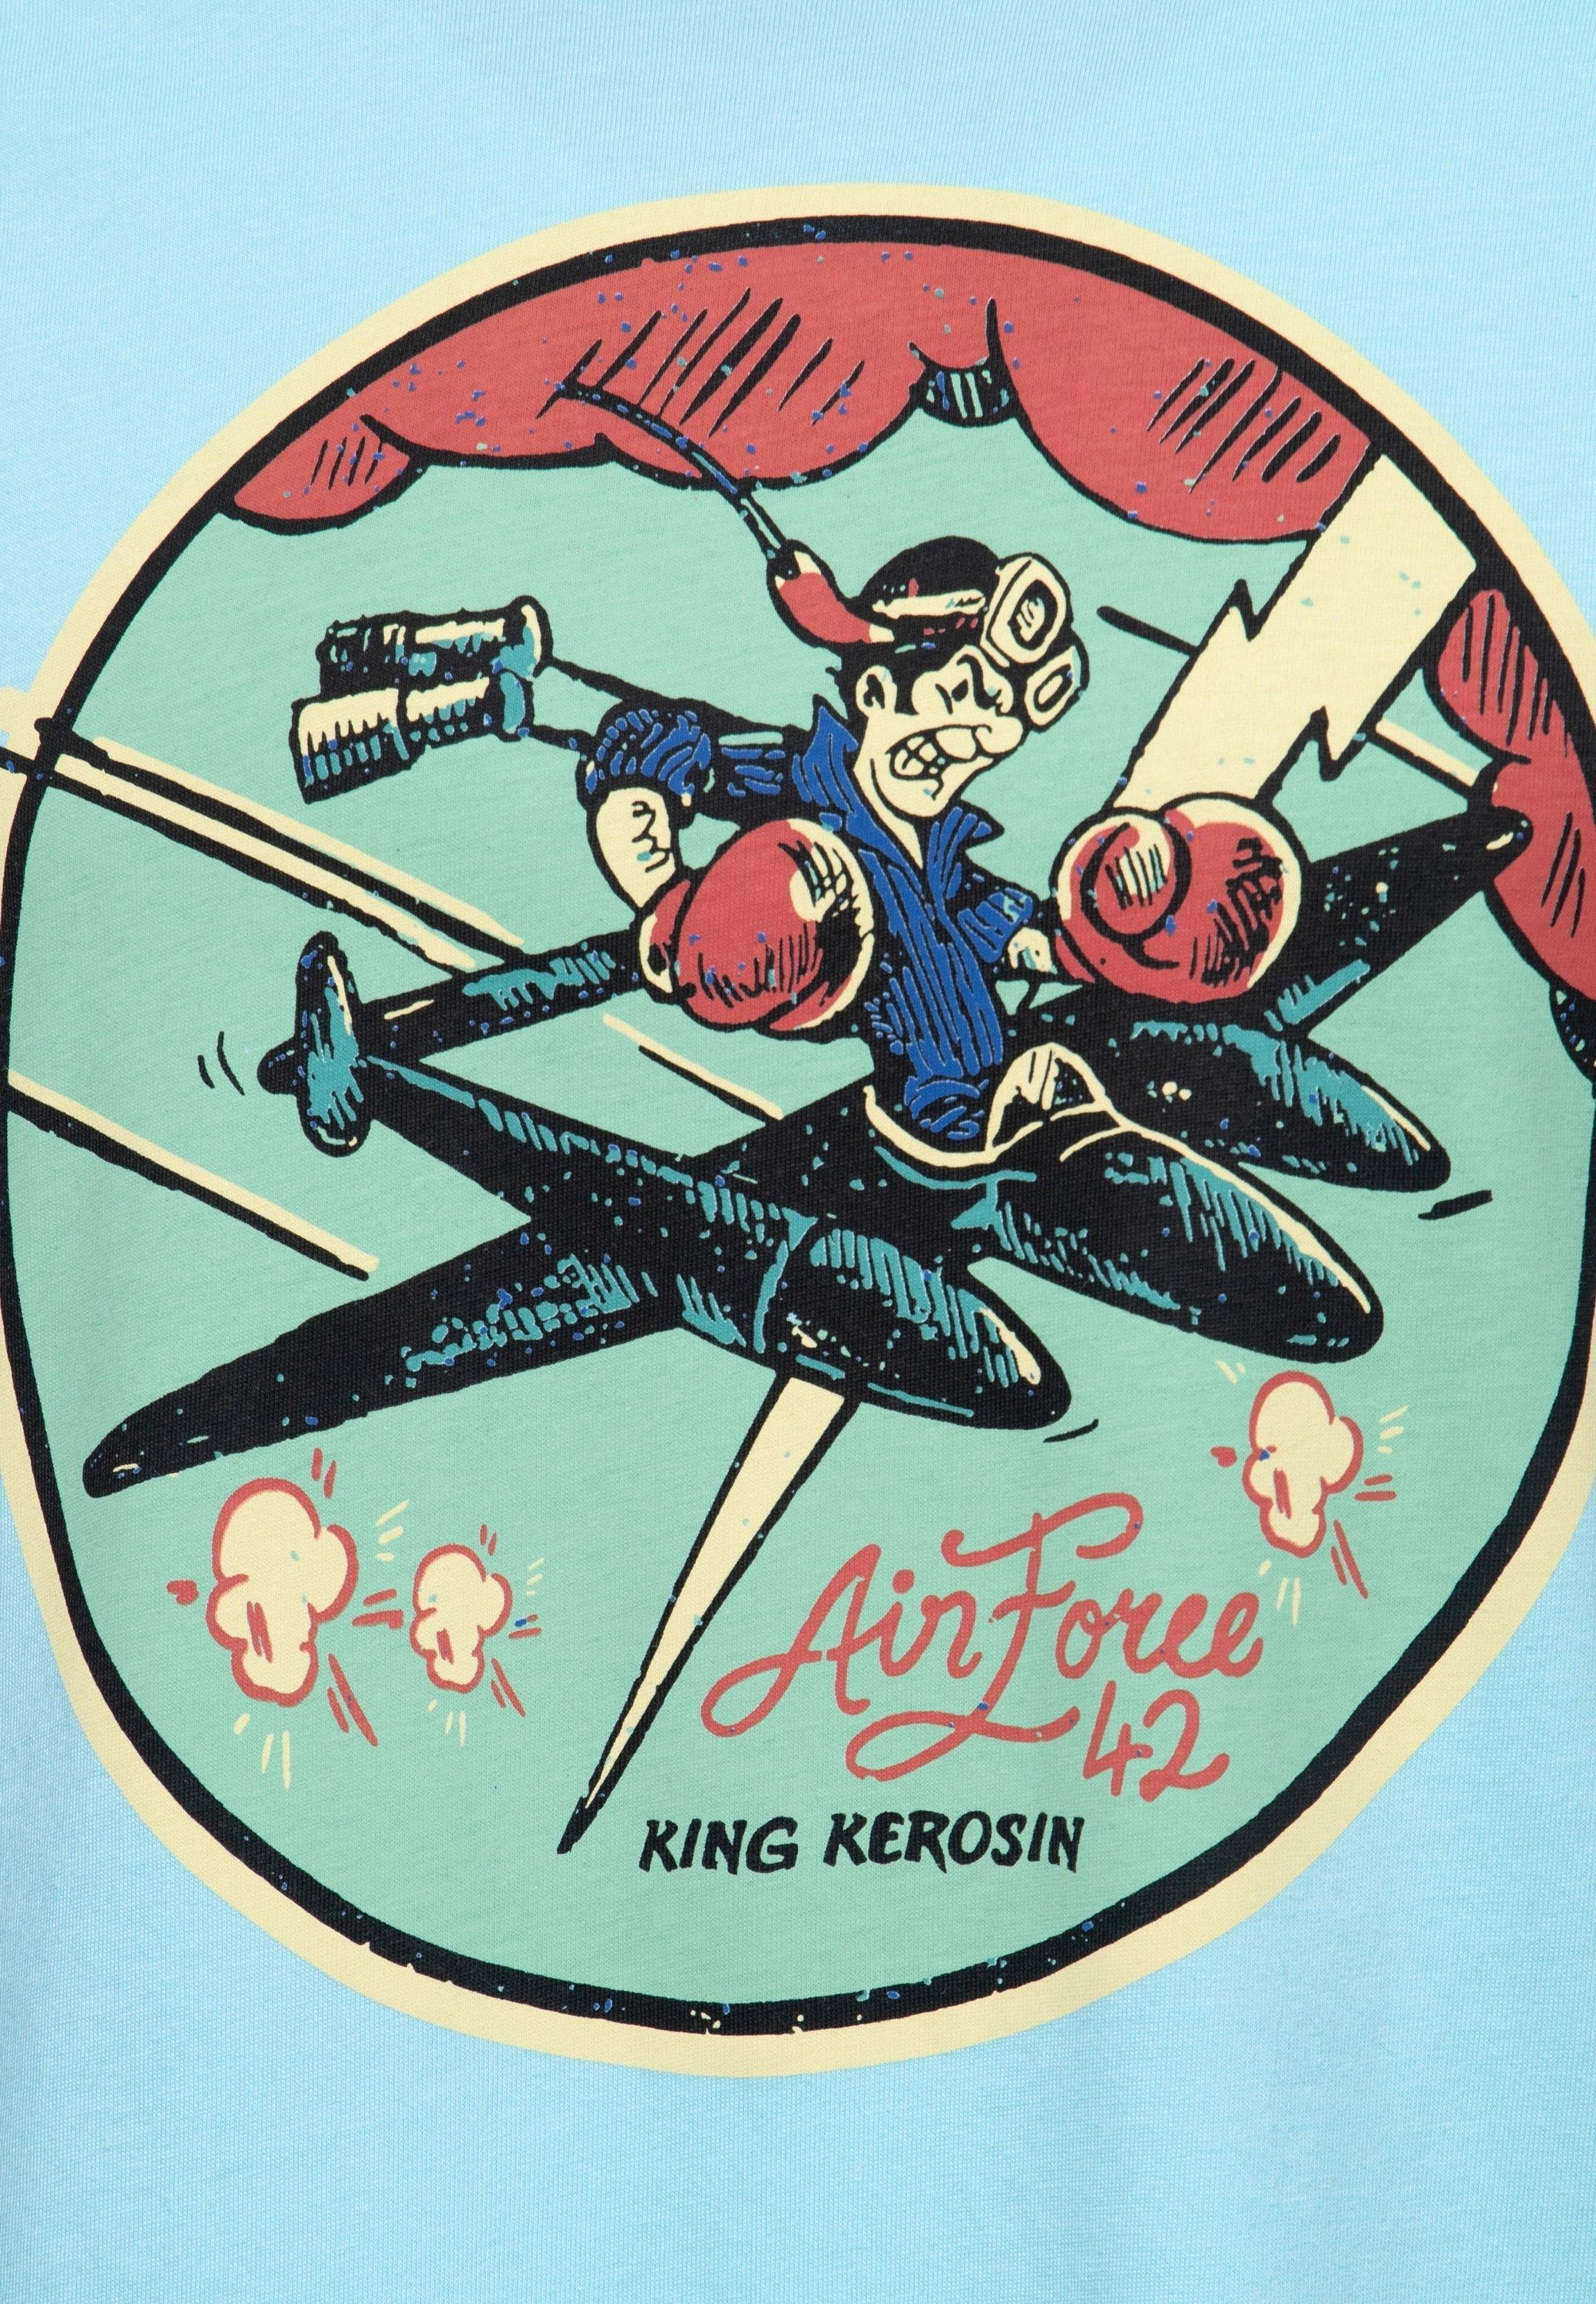 KingKerosin mit (1-tlg) sky im 70s Style coolen Print-Shirt Prints Airforce 42